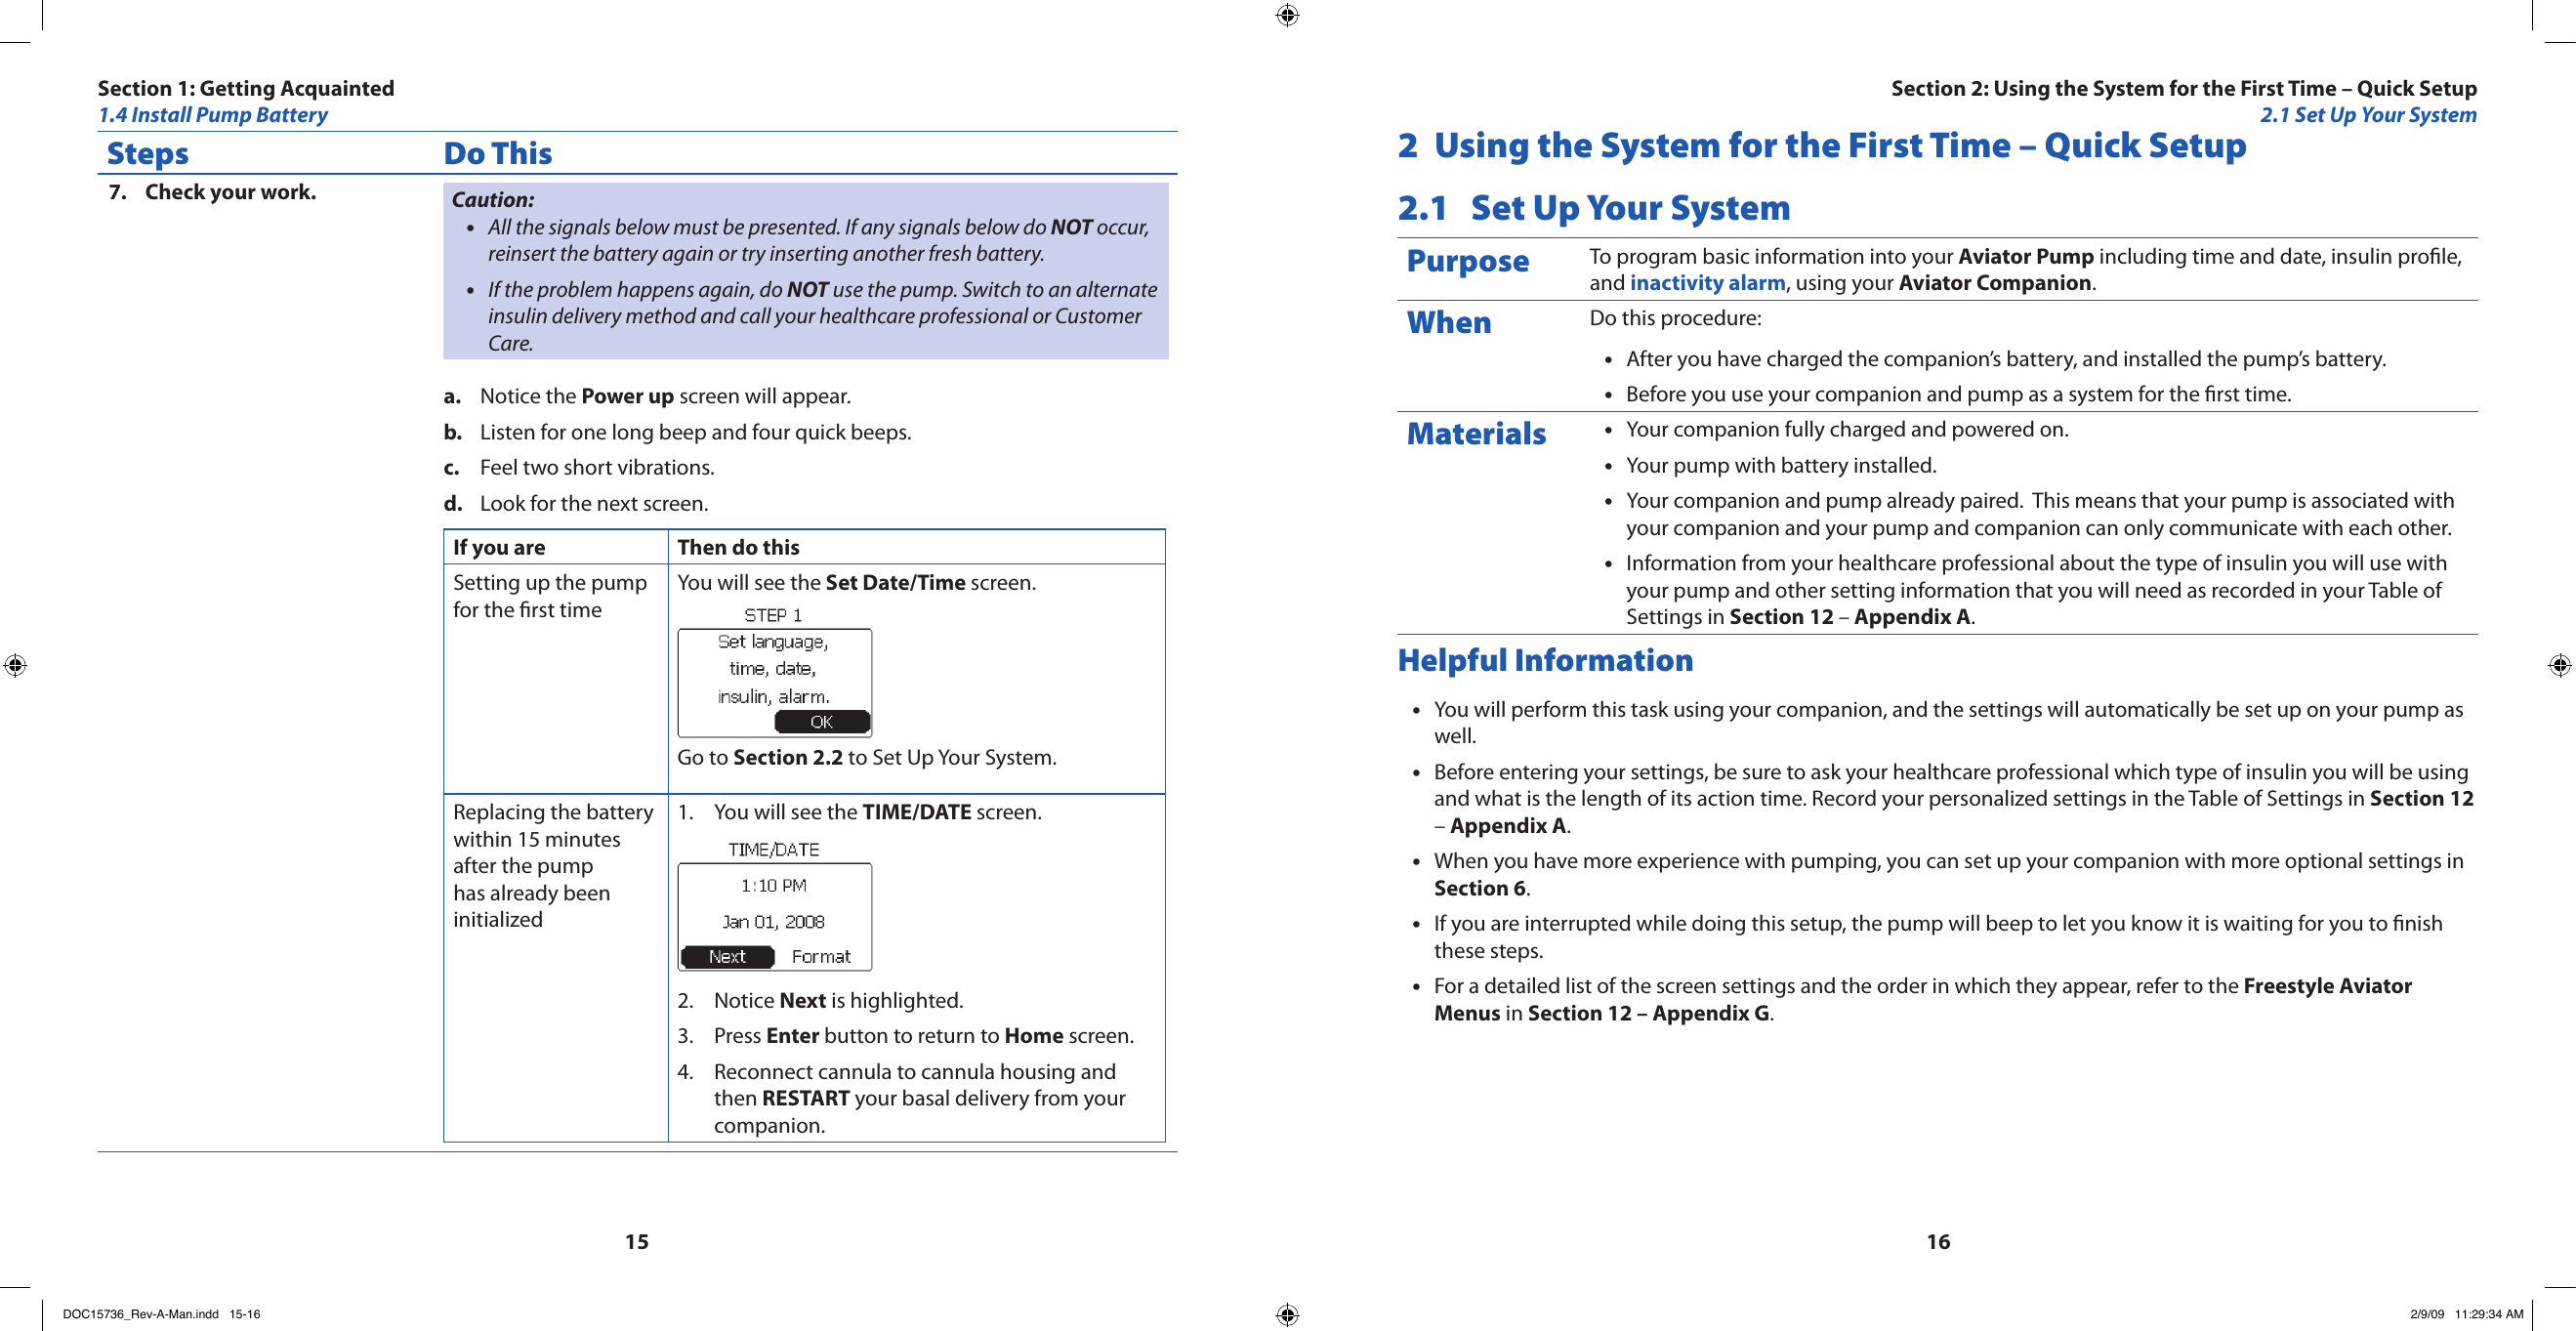 hfm user guide 11.1 2.4 pdf